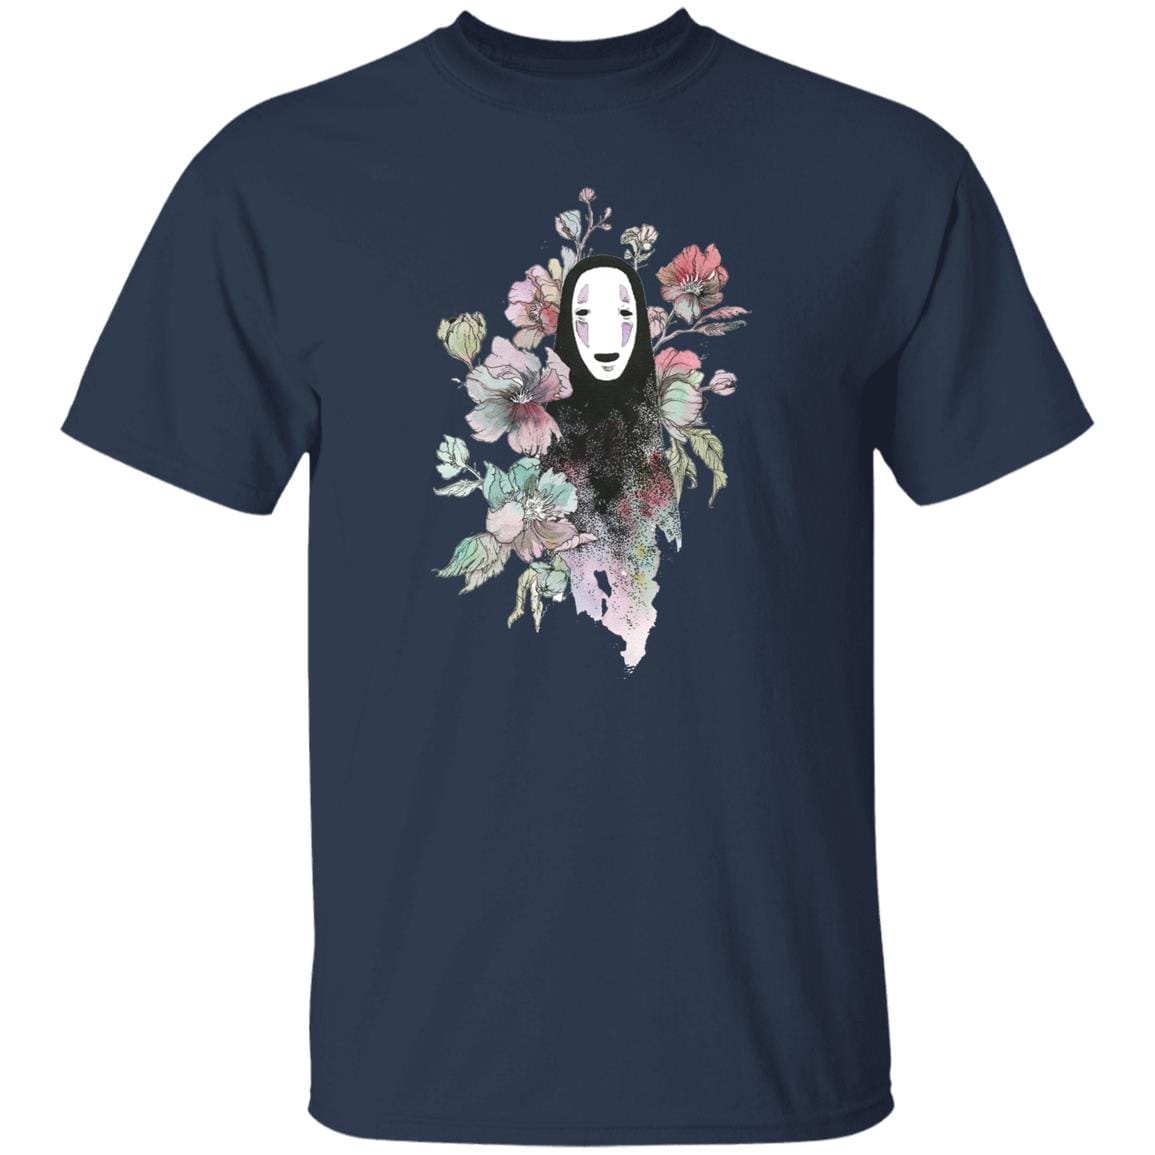 Spirited Away – Kaonashi by the Flowers T Shirt